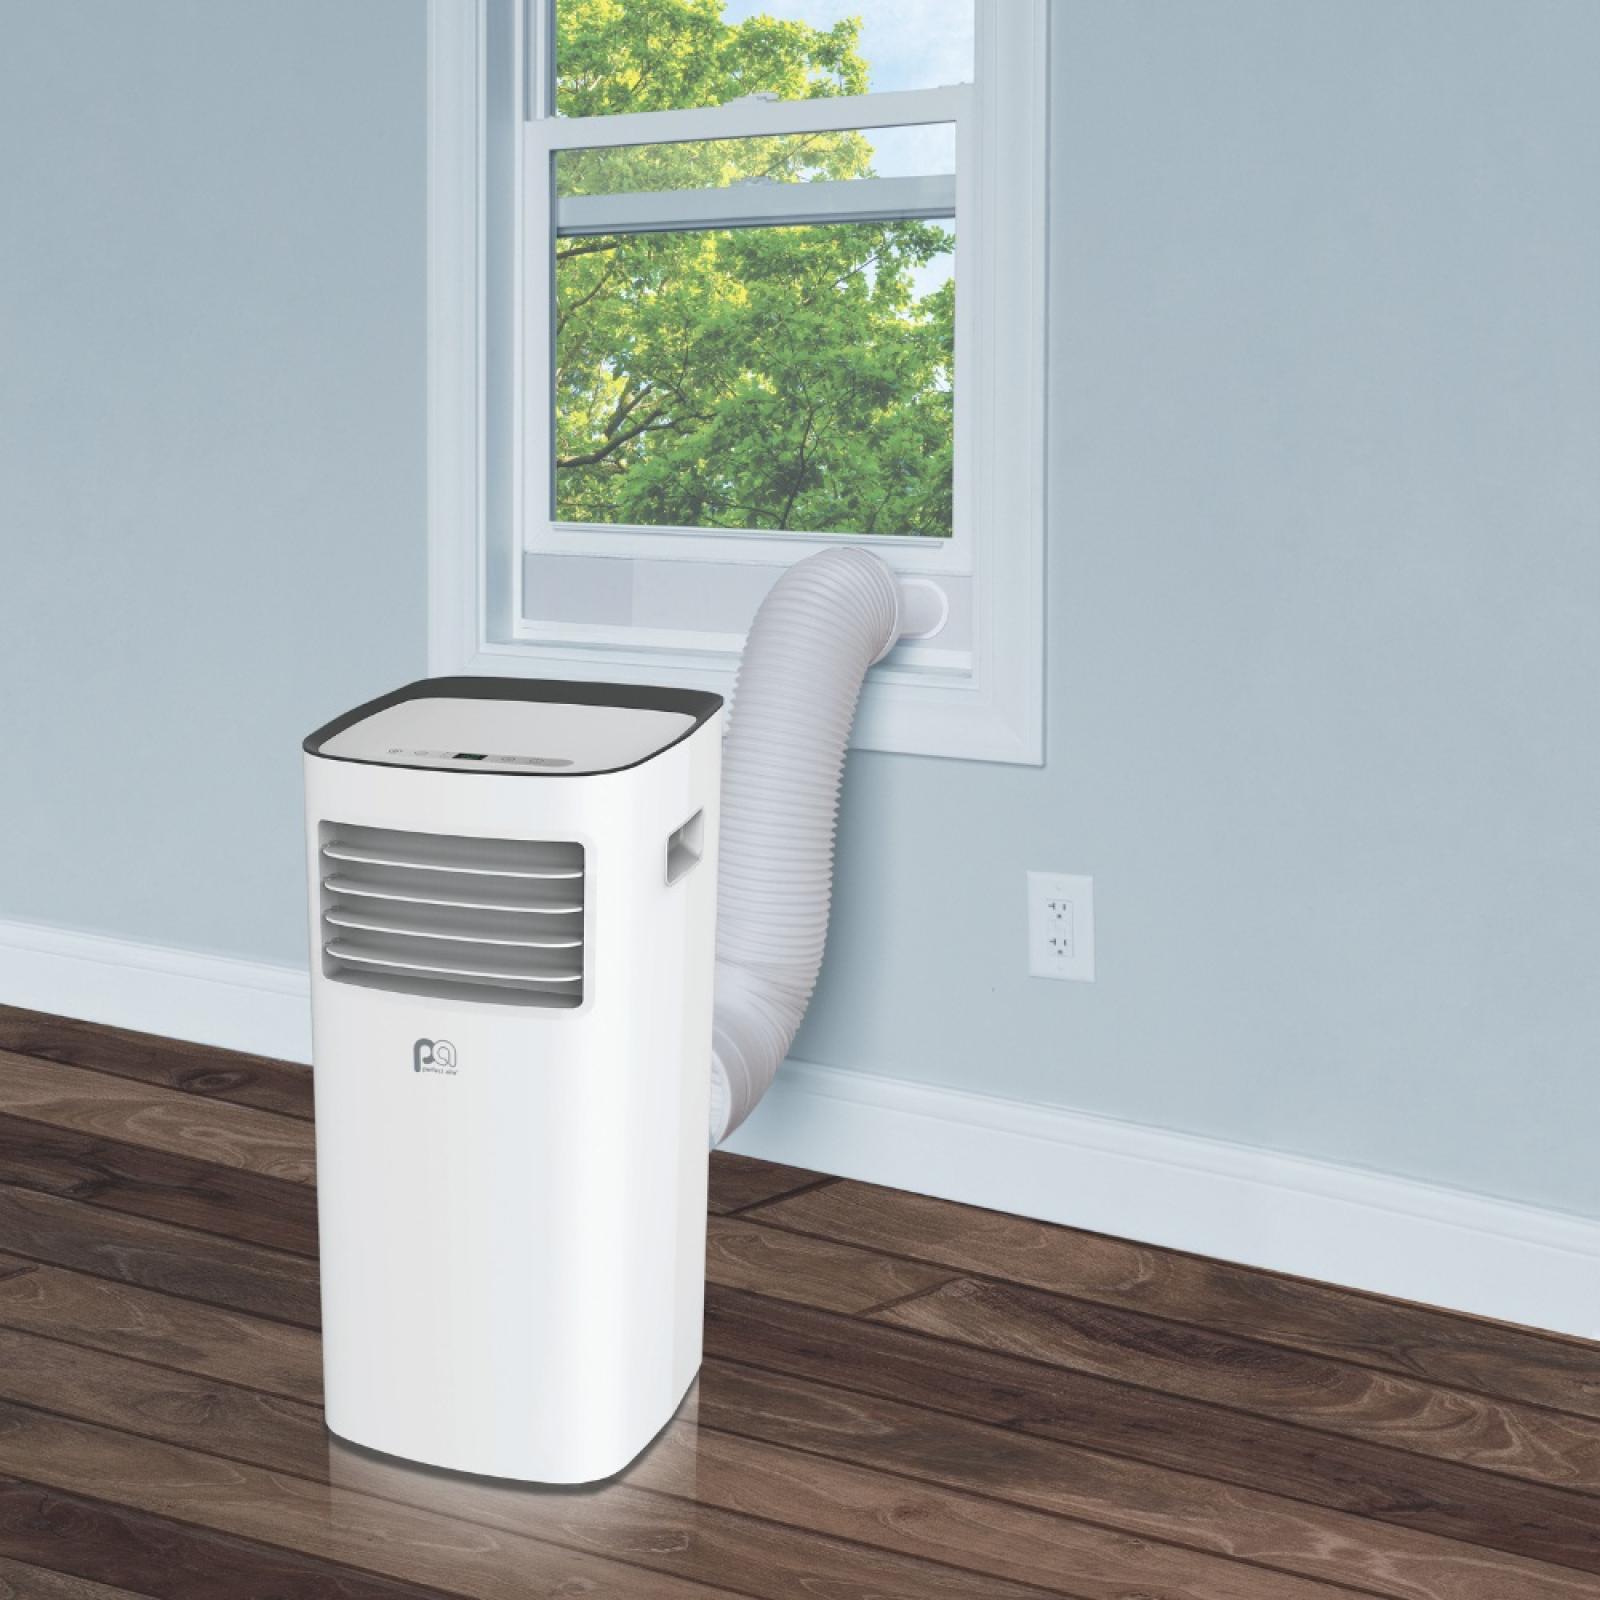 Perfect Aire 9,000 BTU Portable Air Conditioner